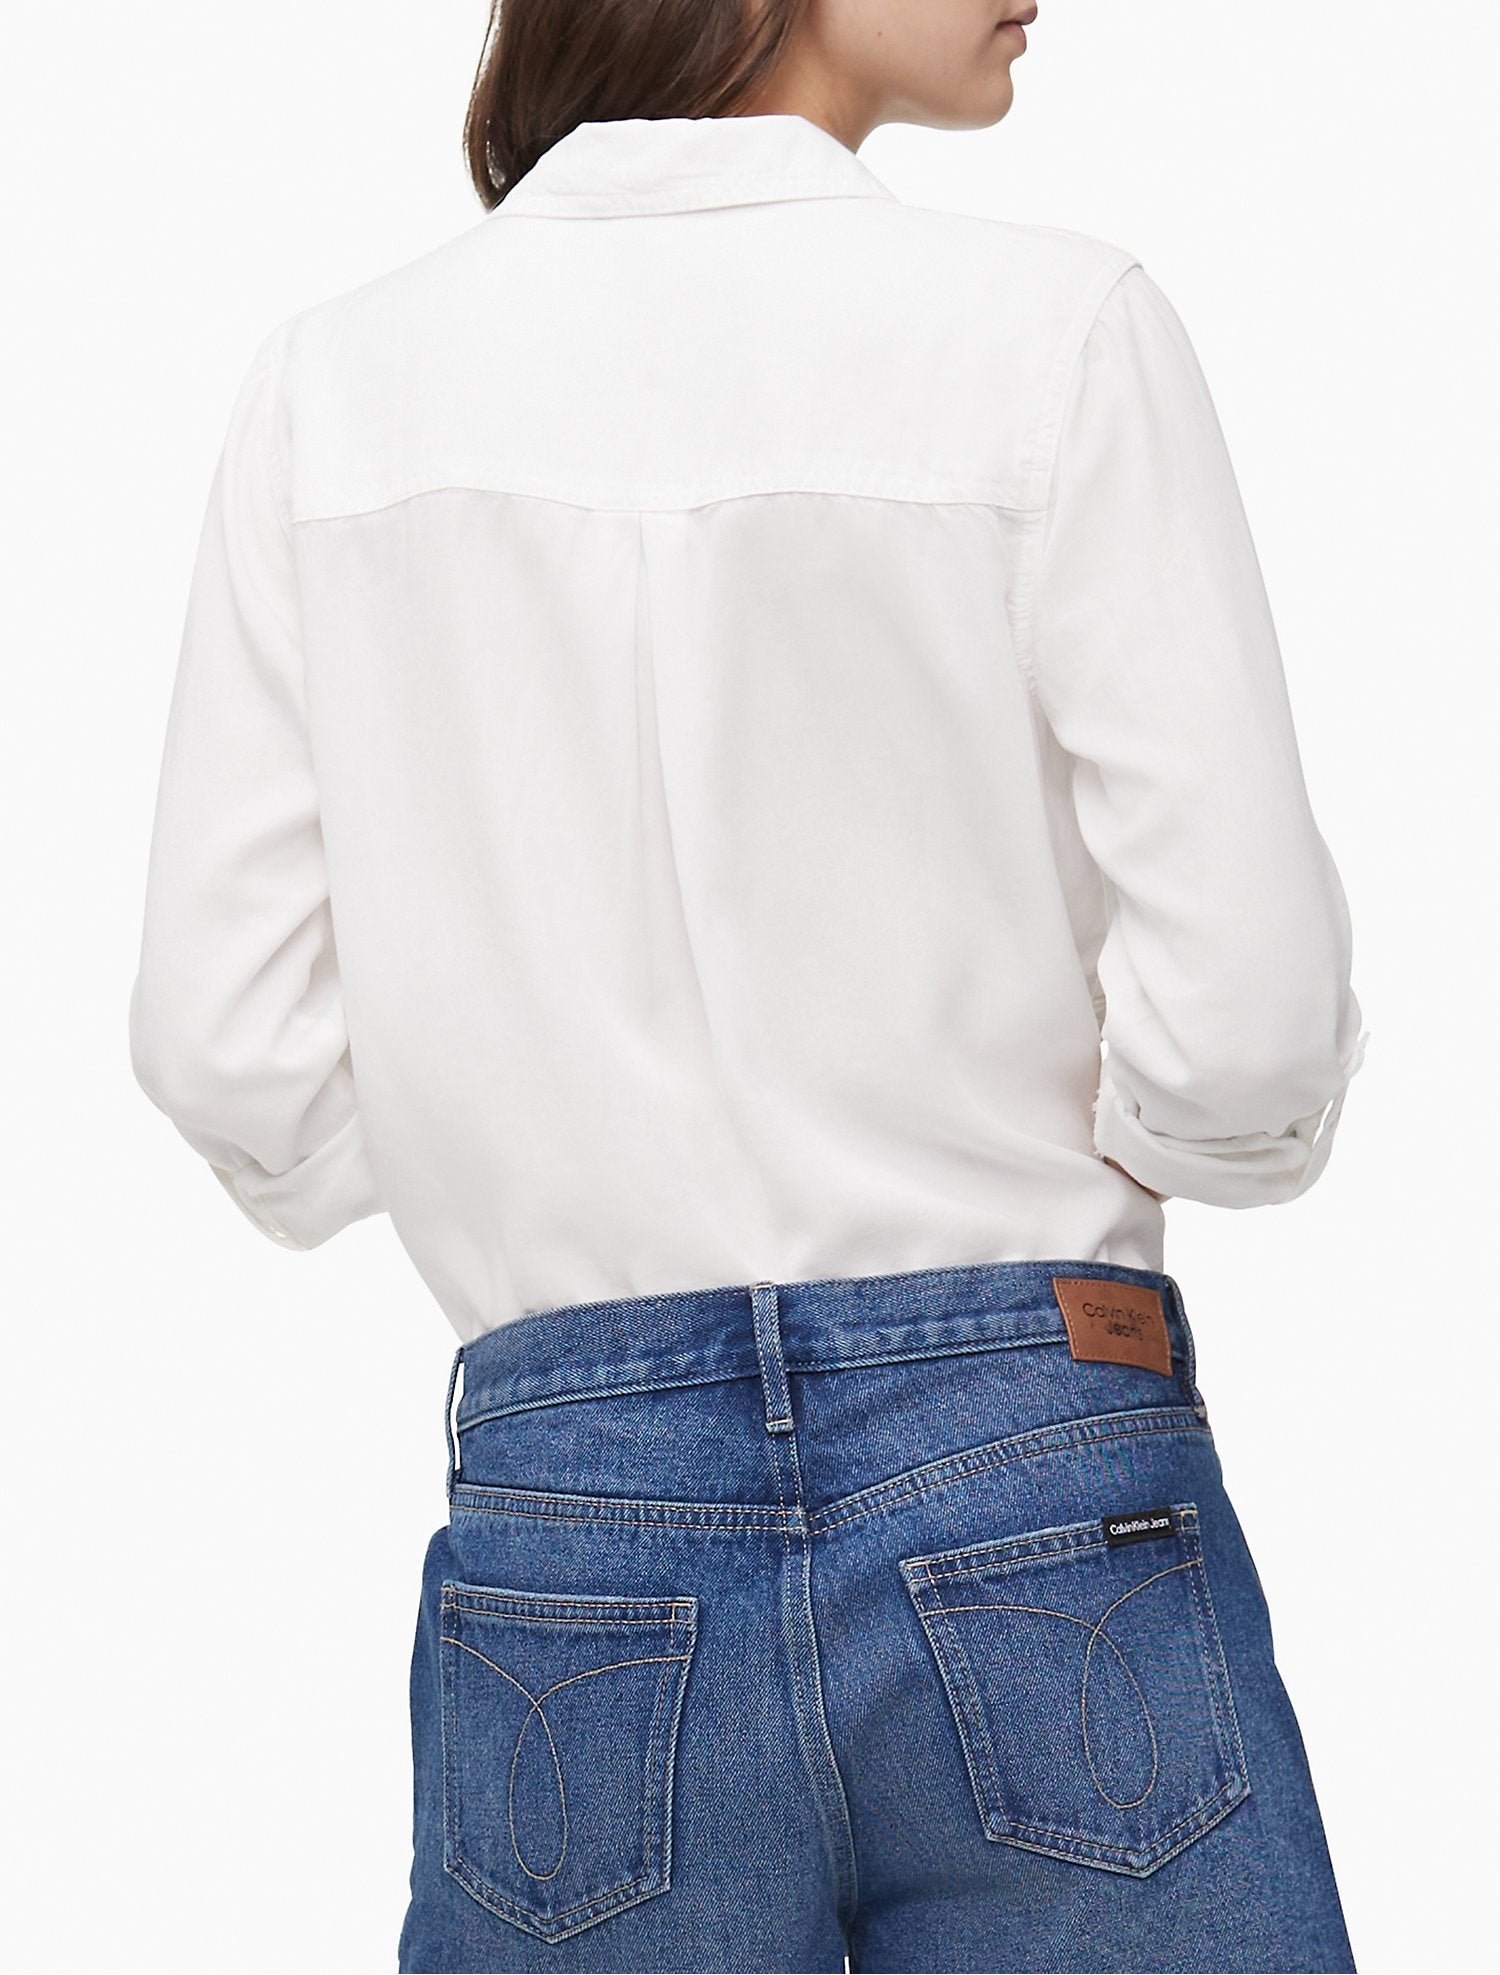 Calvin Klein Solid Button-Down Patch Pocket Shirt - Women